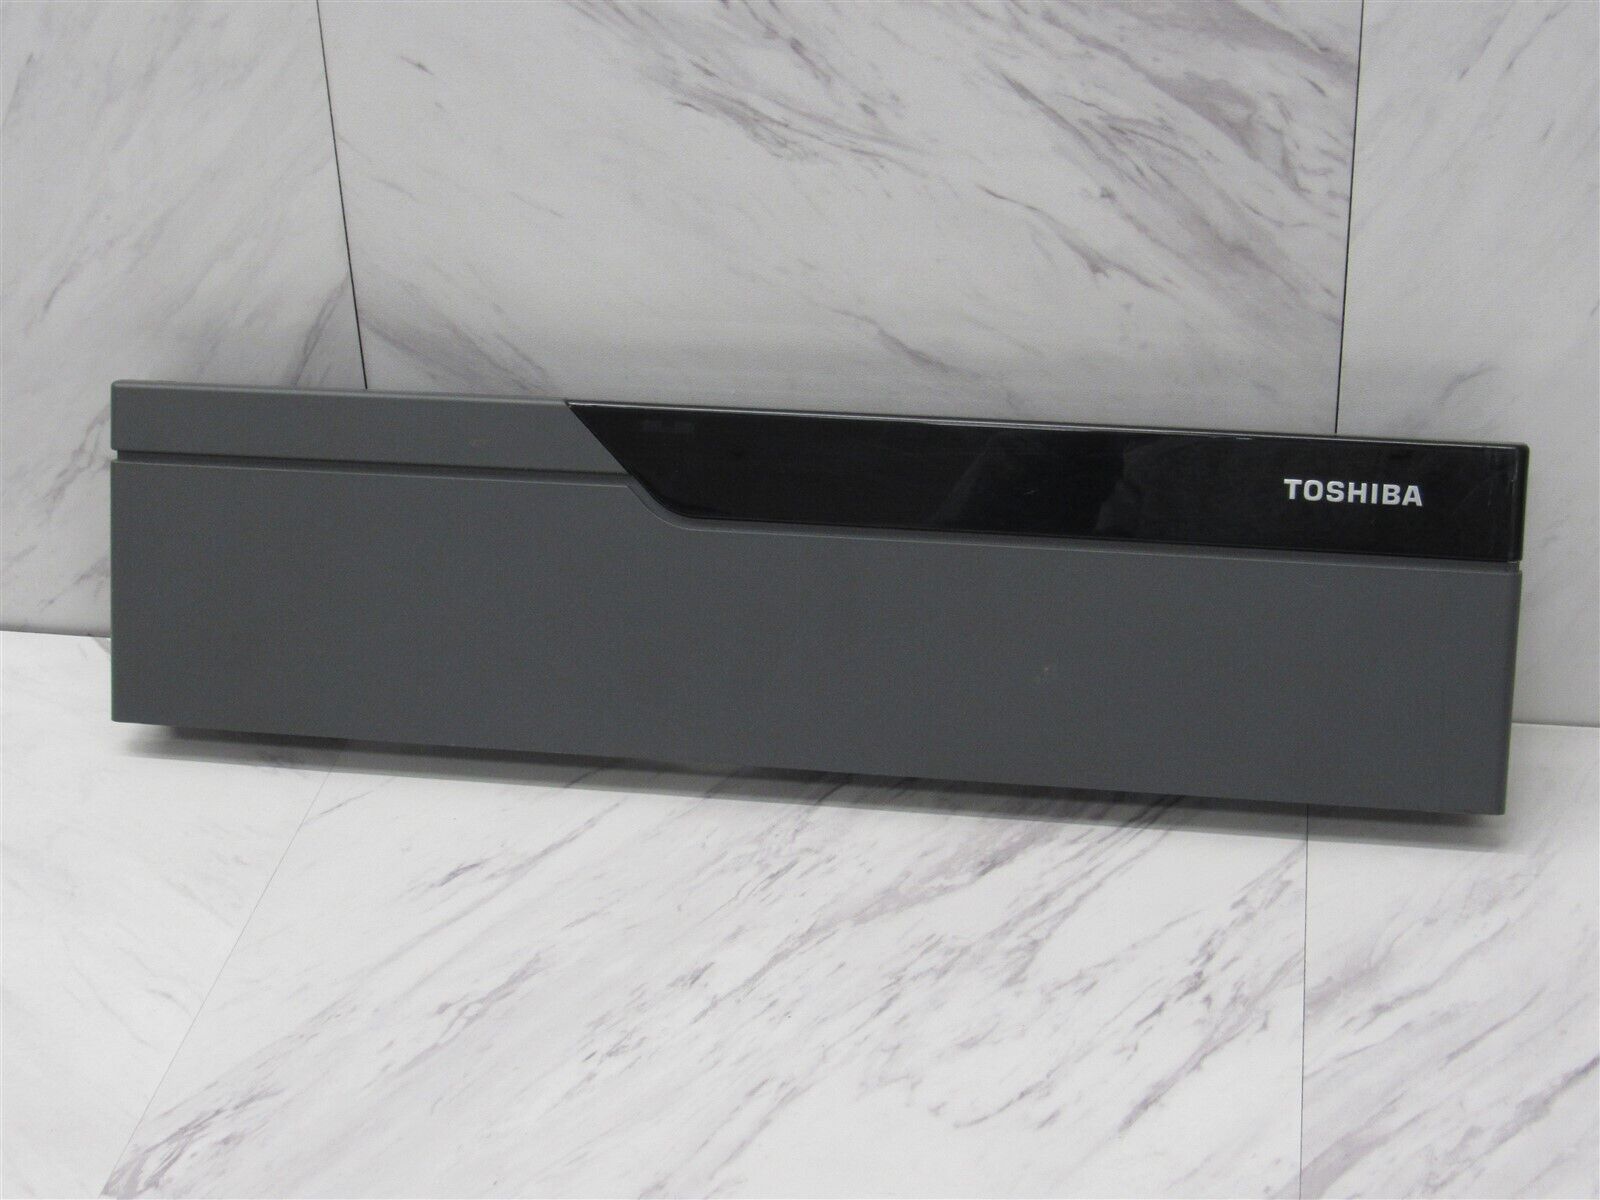 IBM Toshiba TCX700 POS Terminal 4900-786 Front Cover Bezel Faceplate 00GU152